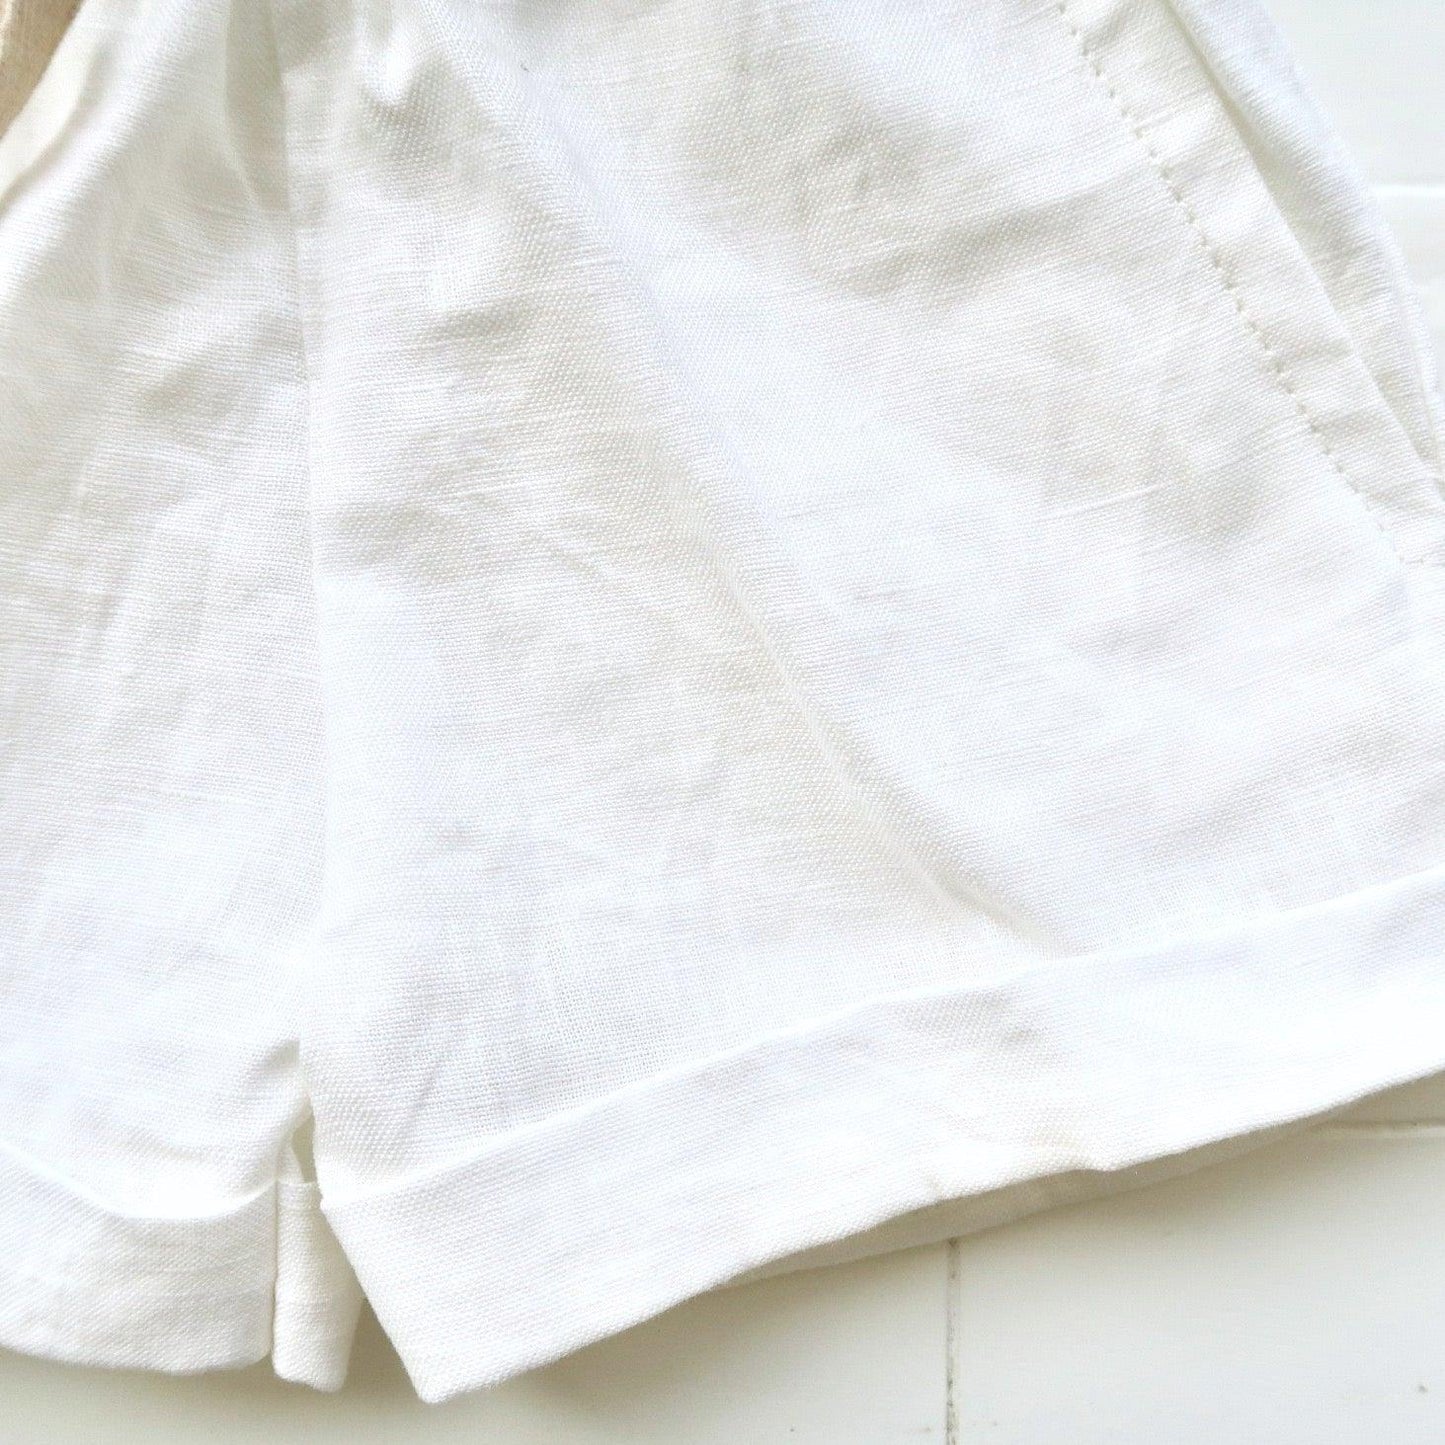 Sundrop Shorts in White Linen - Lil' Tati